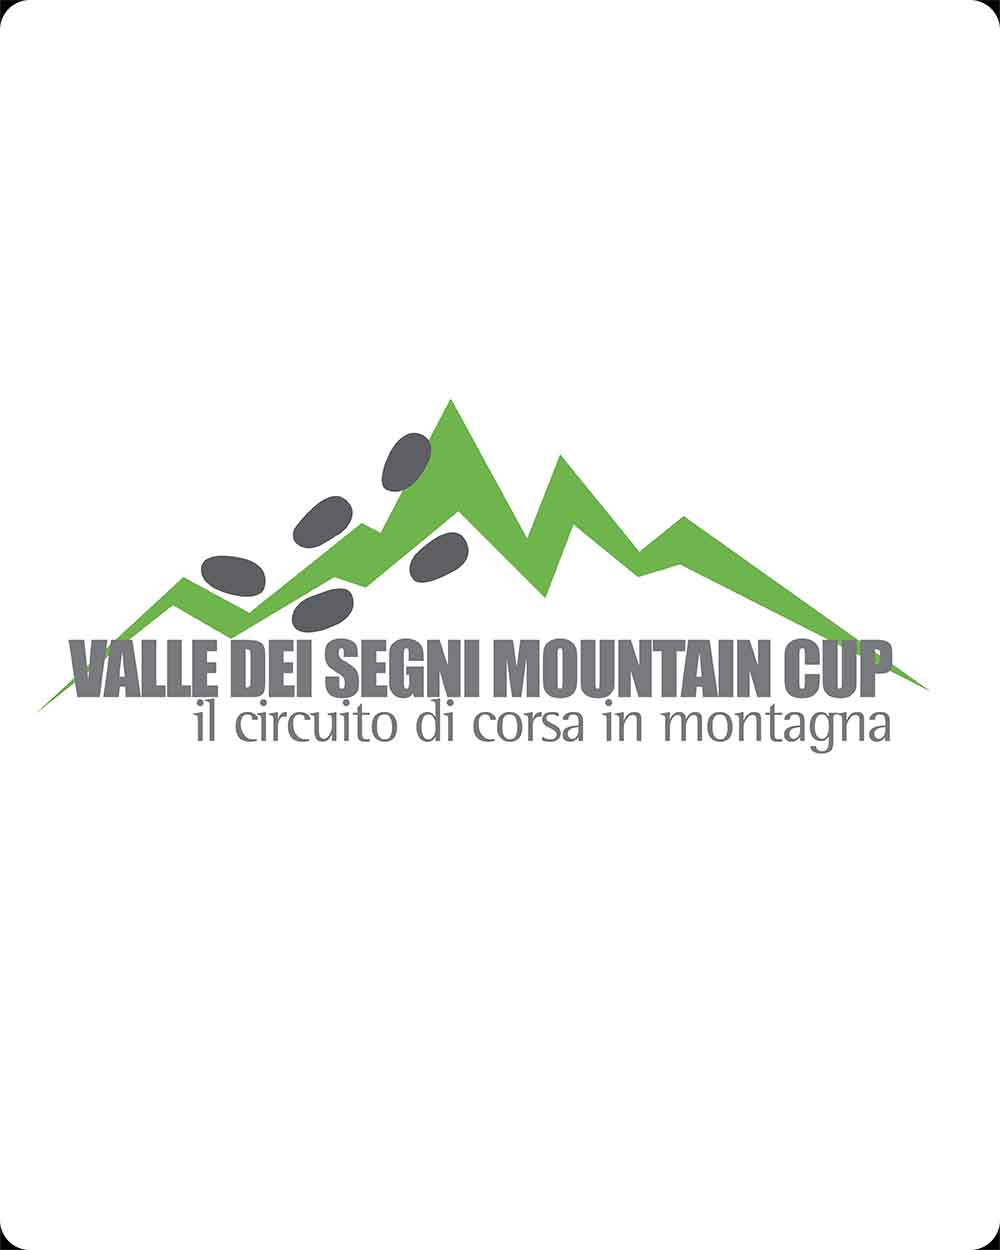 Valle dei segni Mountain Cup